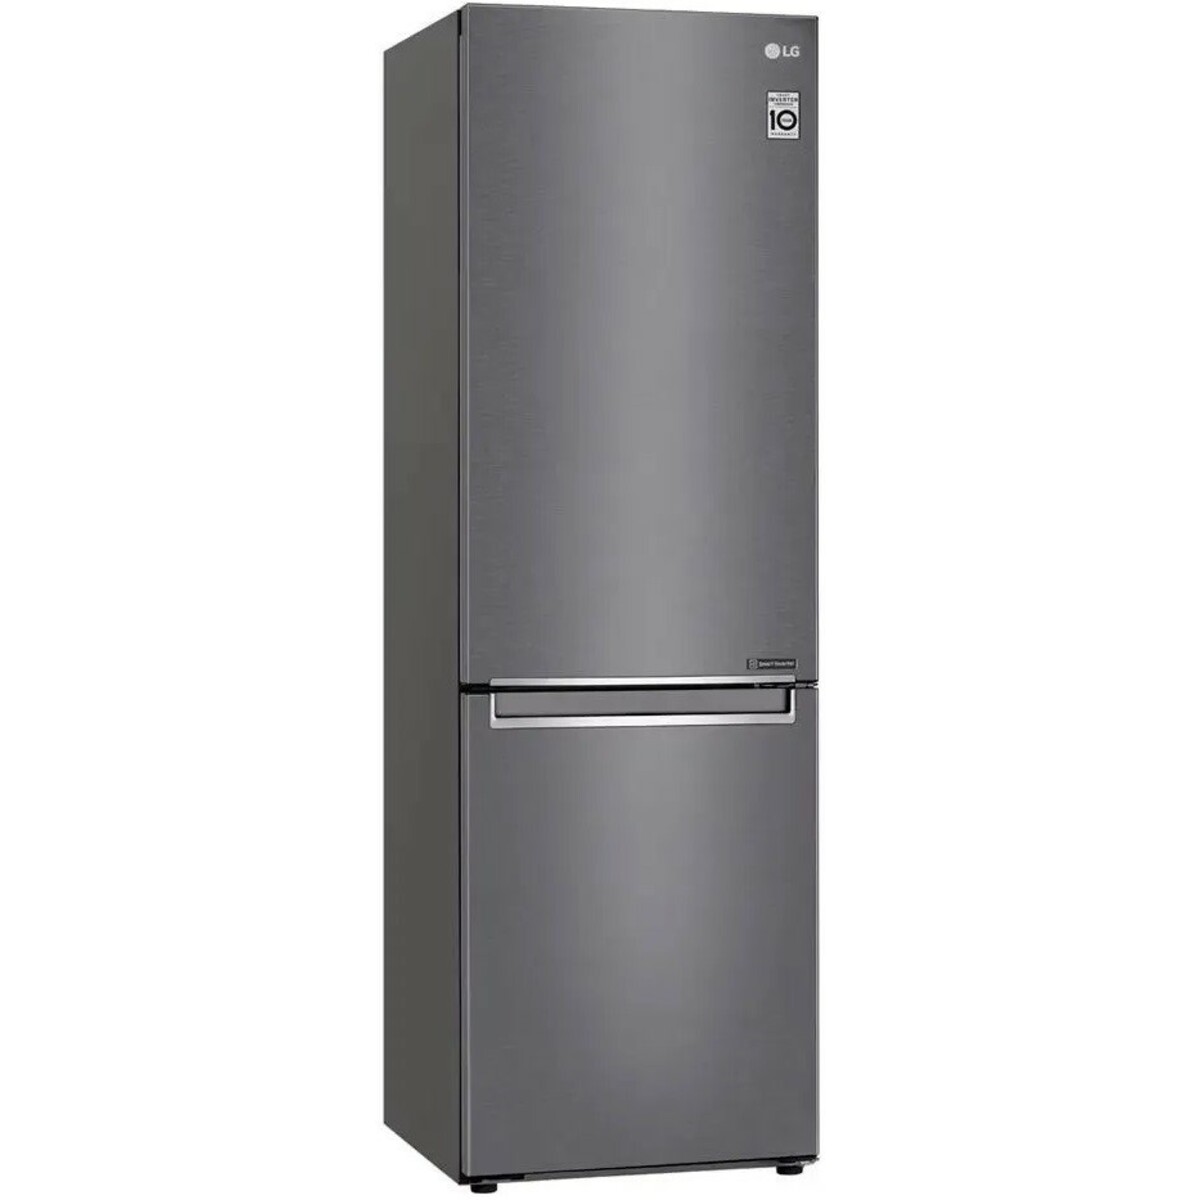 Холодильник LG GC-B459 SLCL (Цвет: Graphite)